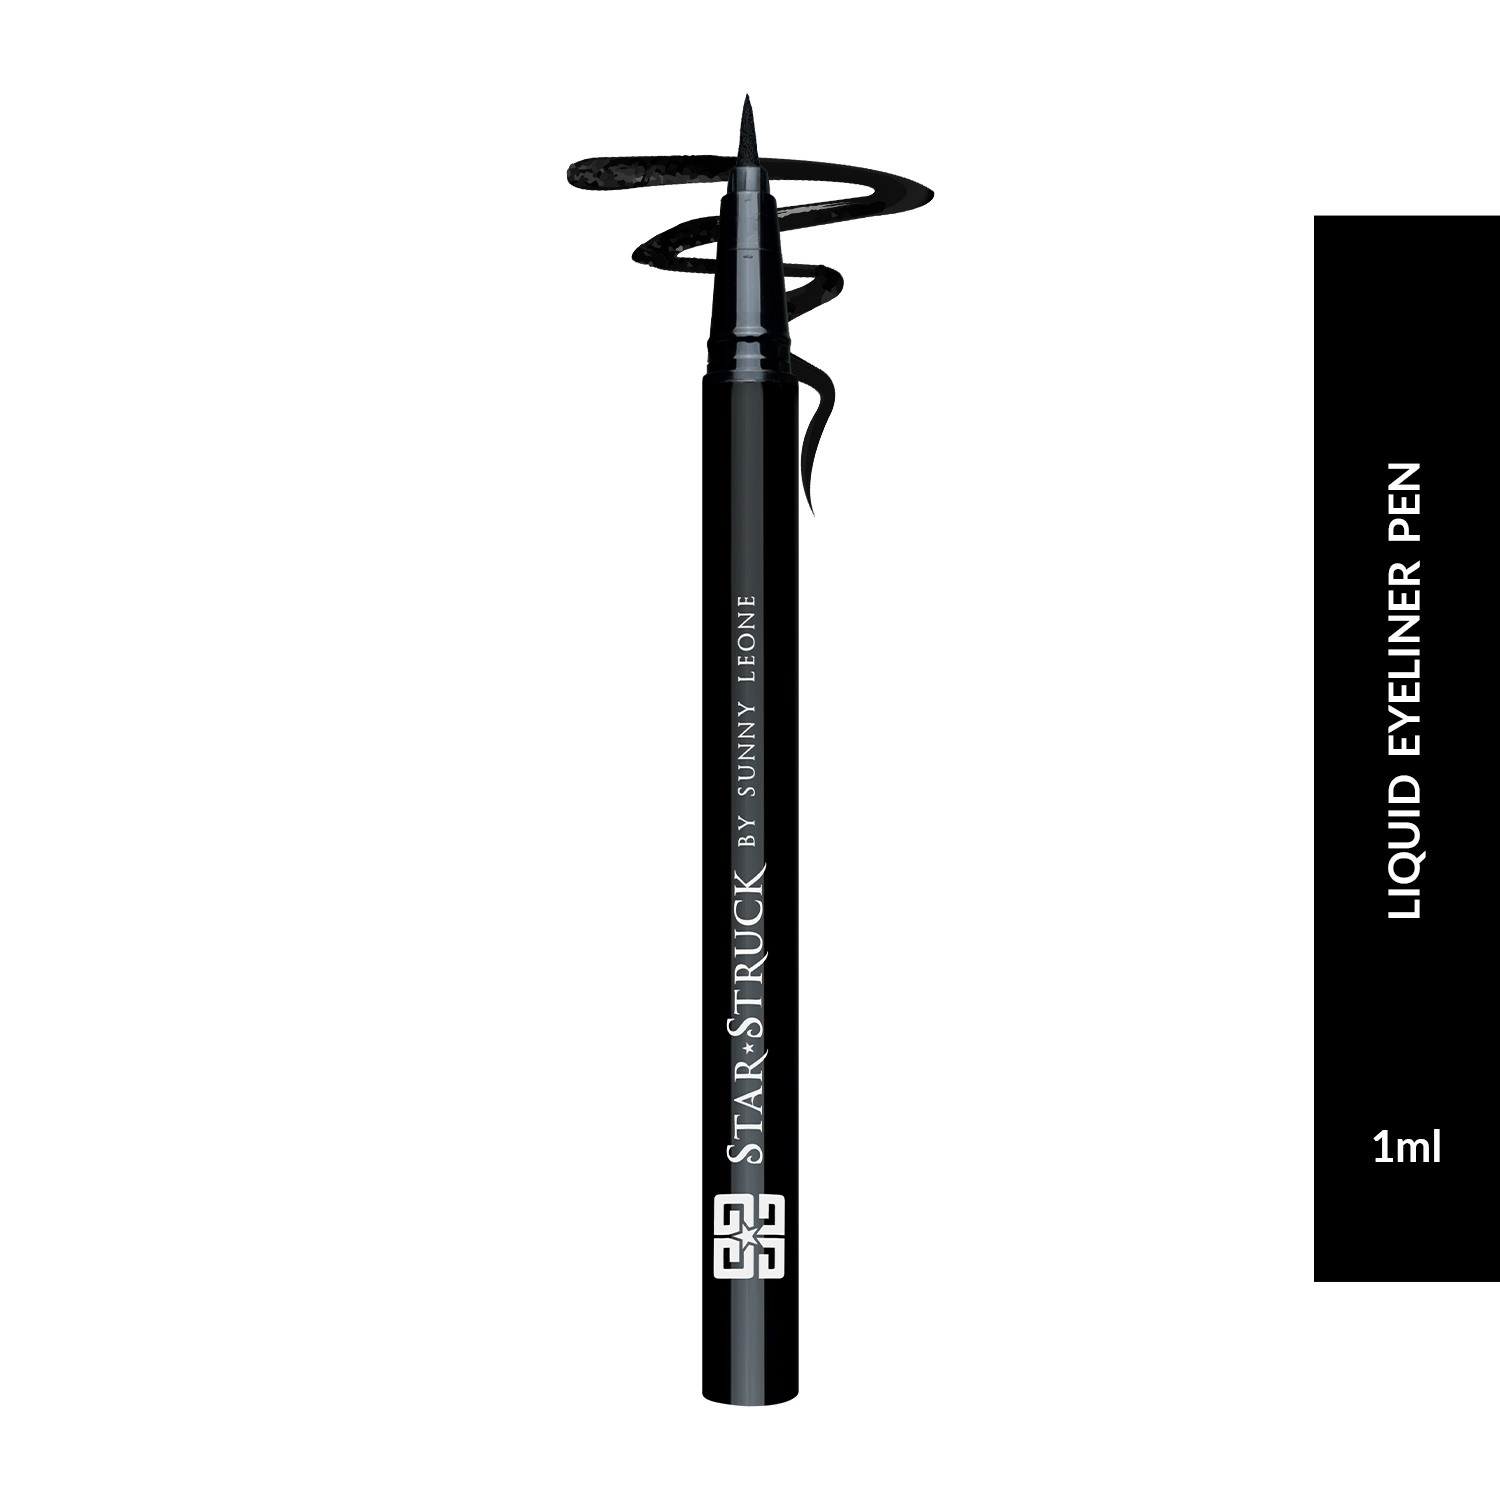 Star Struck by Sunny Leone Liquid Eyeliner Pen - Black (1ml)